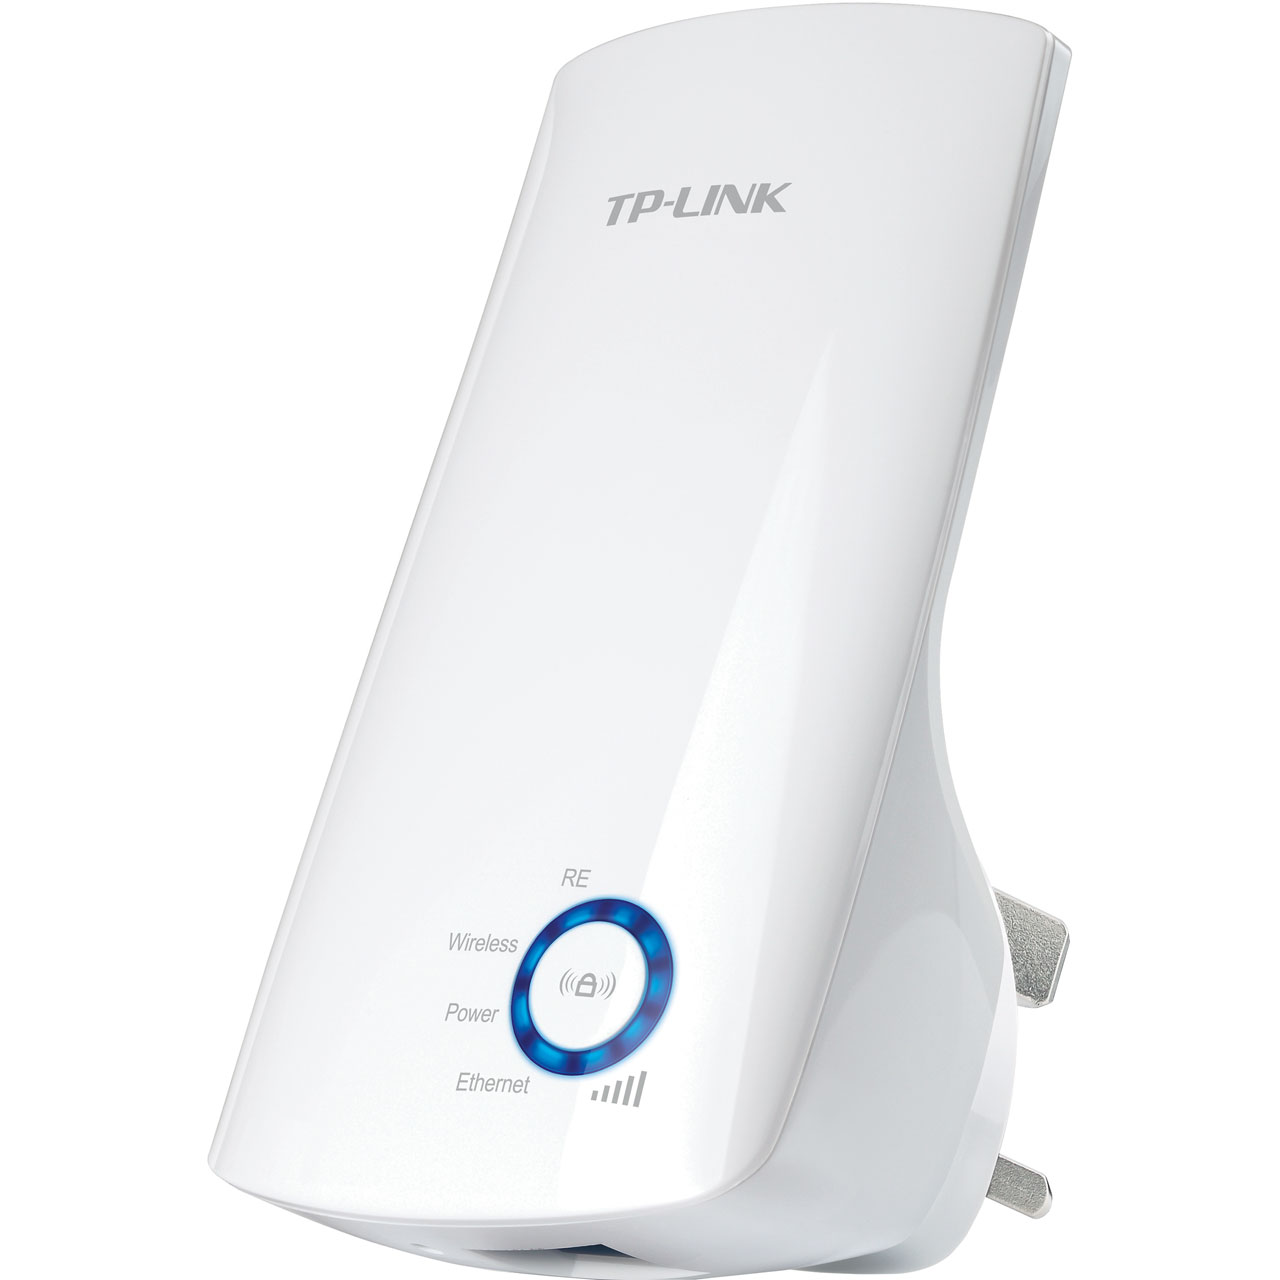 TP-Link TL-WA850RE Single Band N300 WiFi Range Extender Review